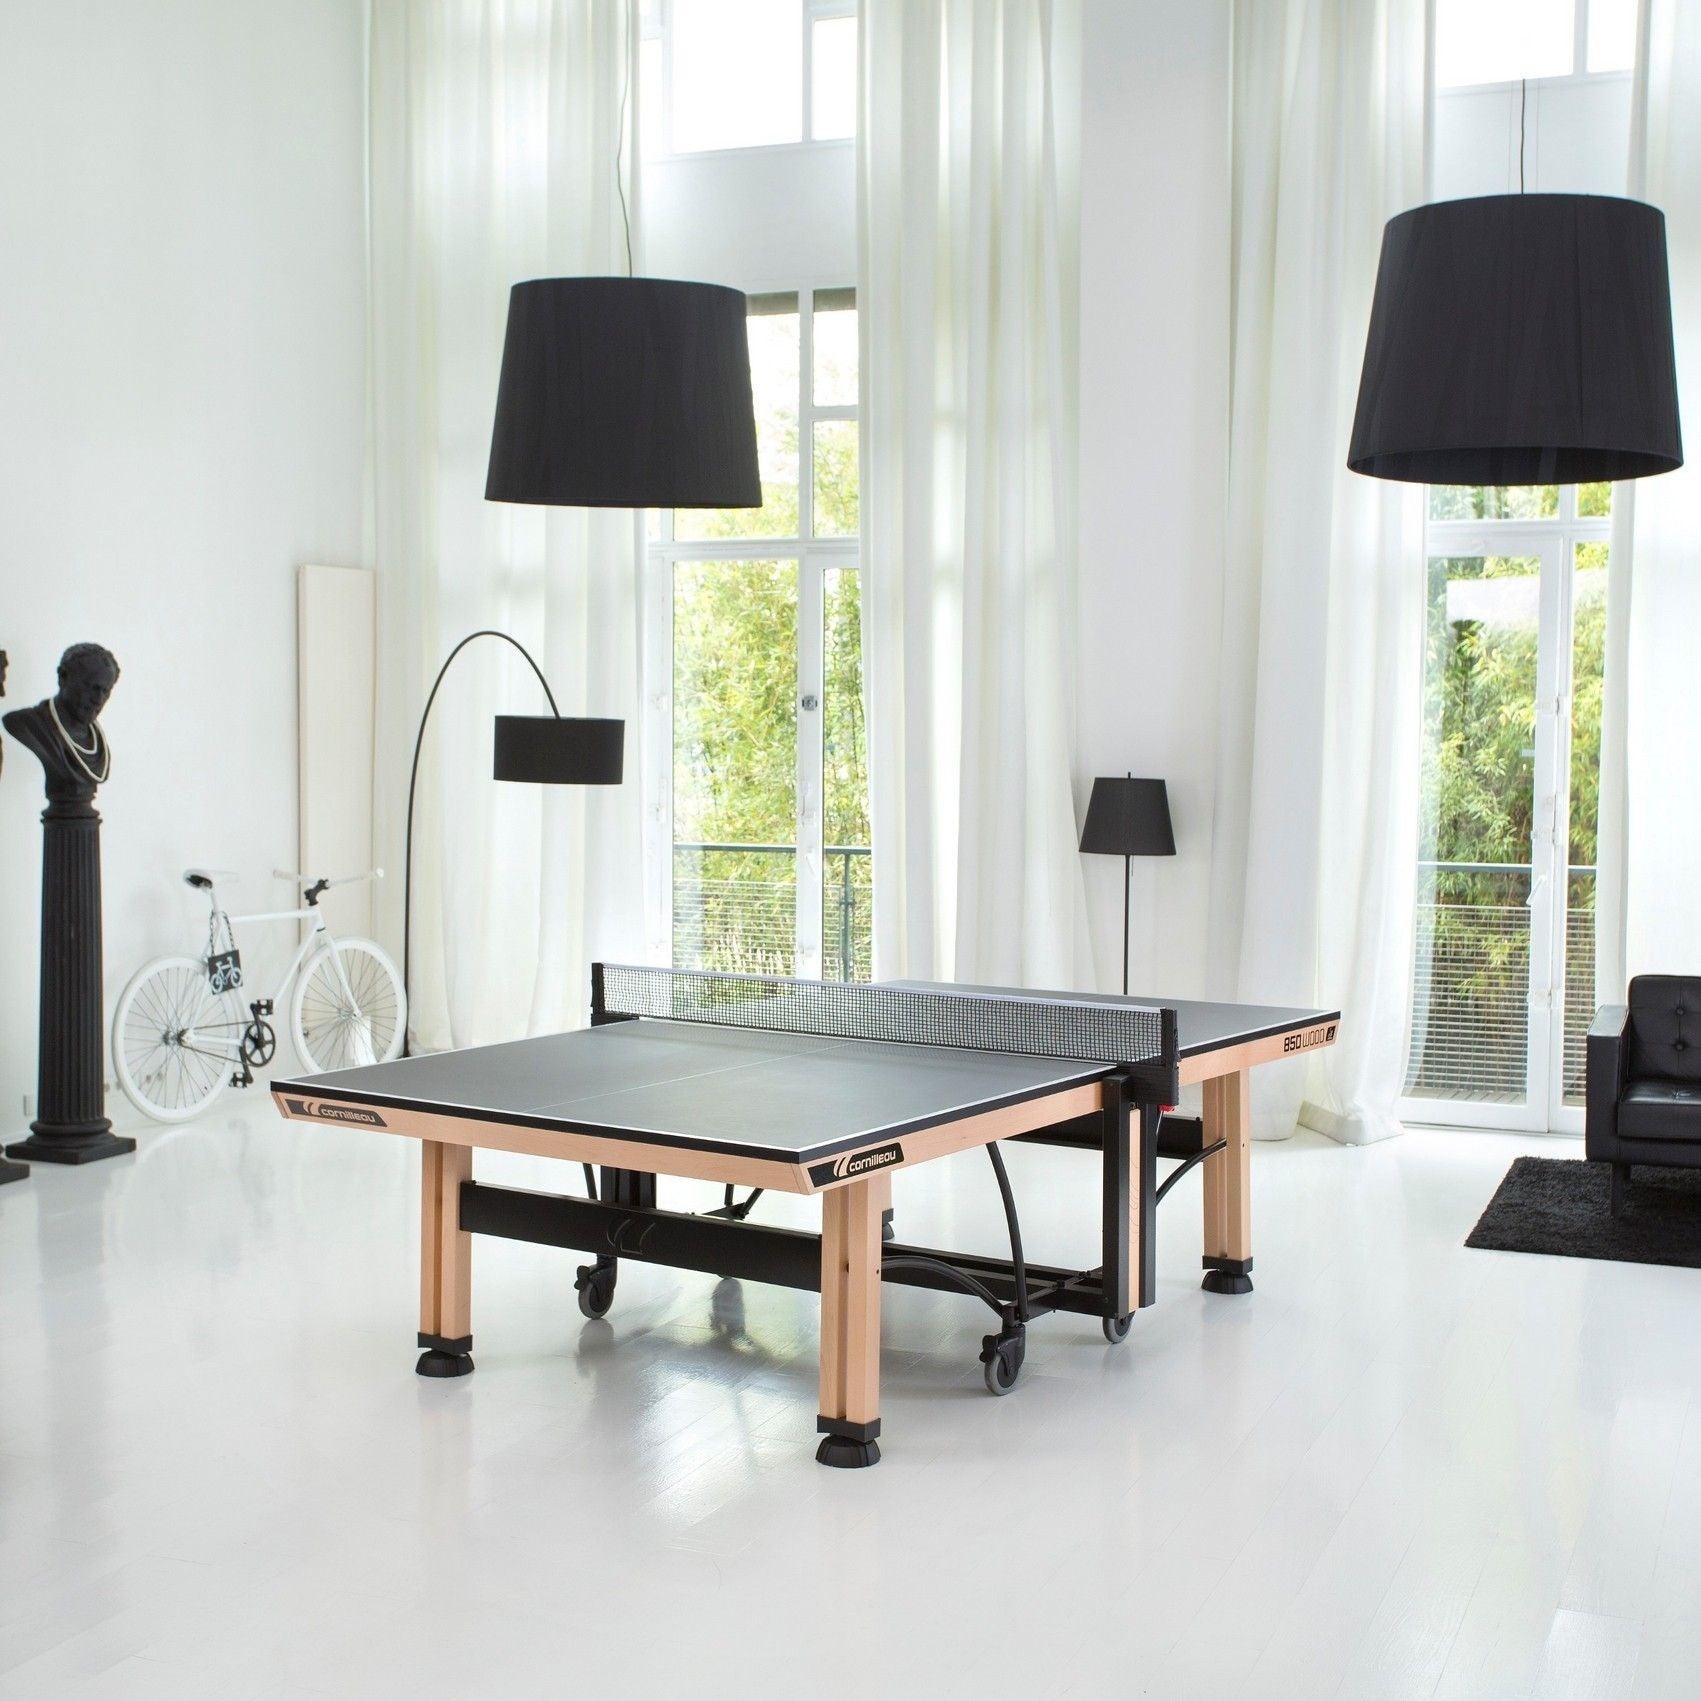 Cornilleau 850 Wood Table Tennis Table